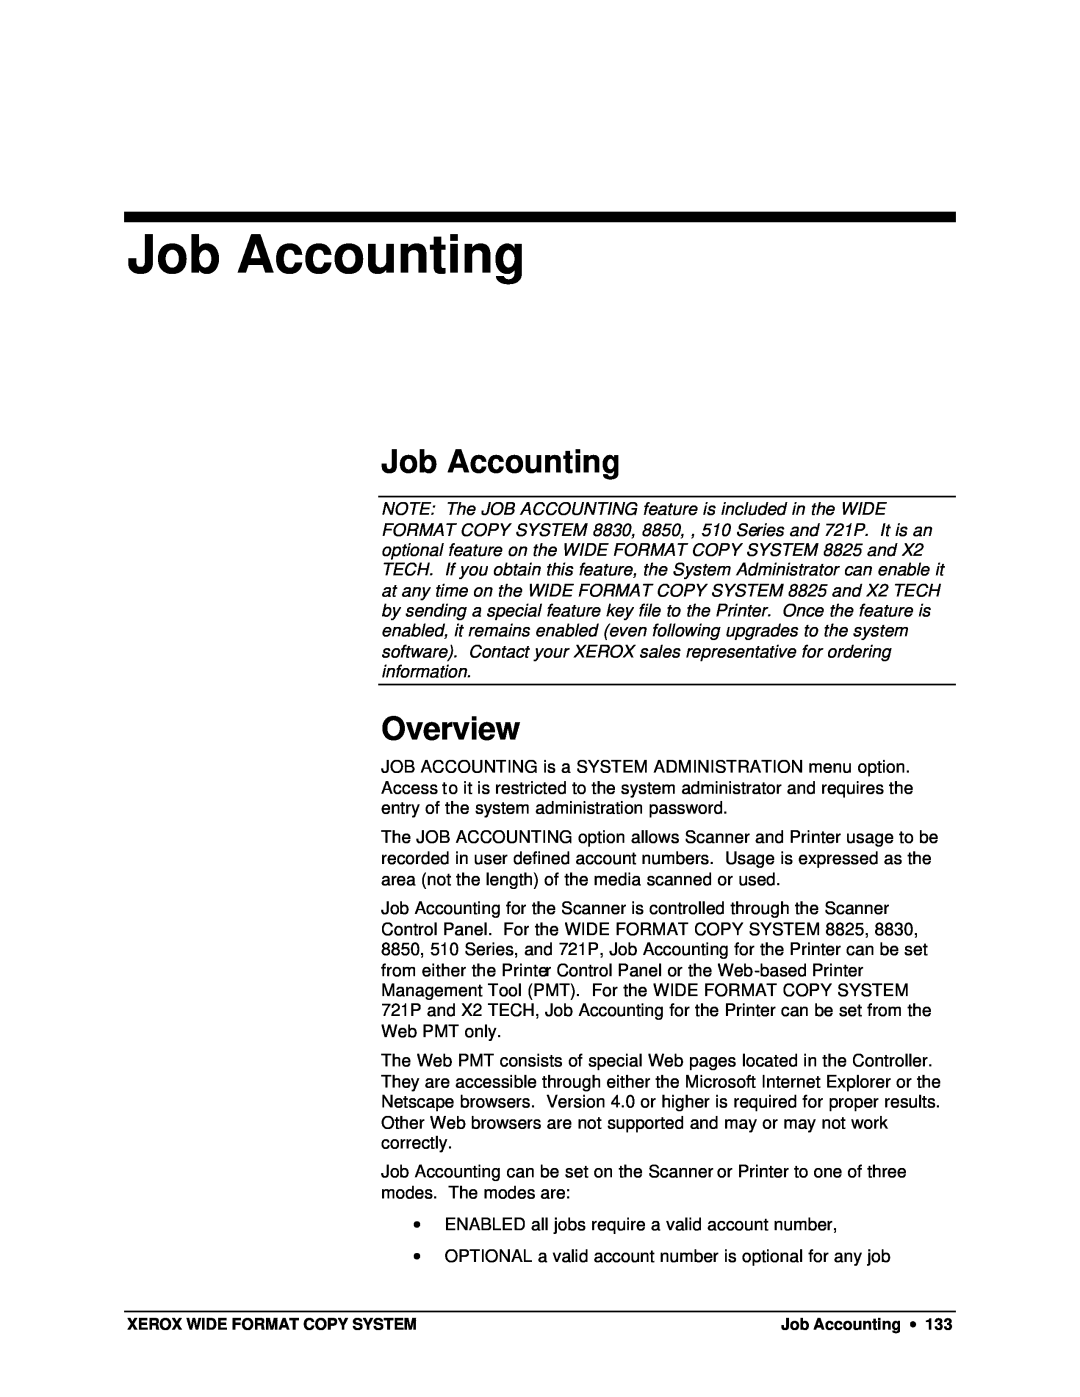 Xerox X2, 8825, 8850, 8830 manual Job Accounting, Overview 